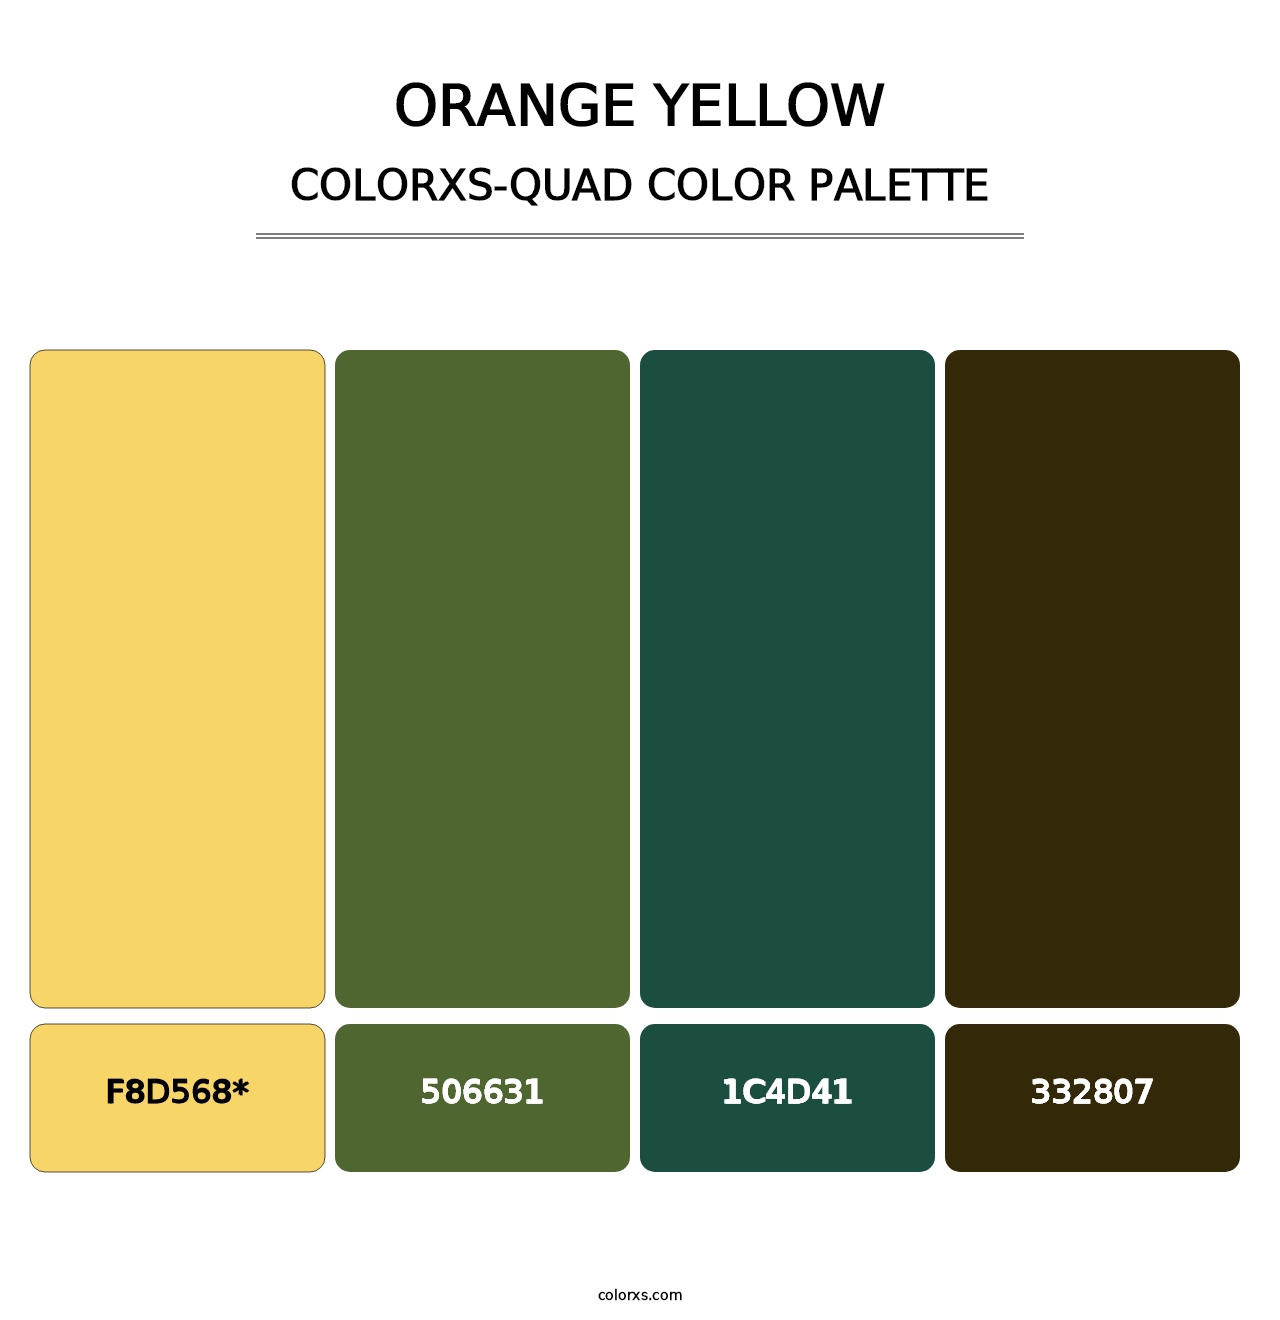 Orange Yellow - Colorxs Quad Palette